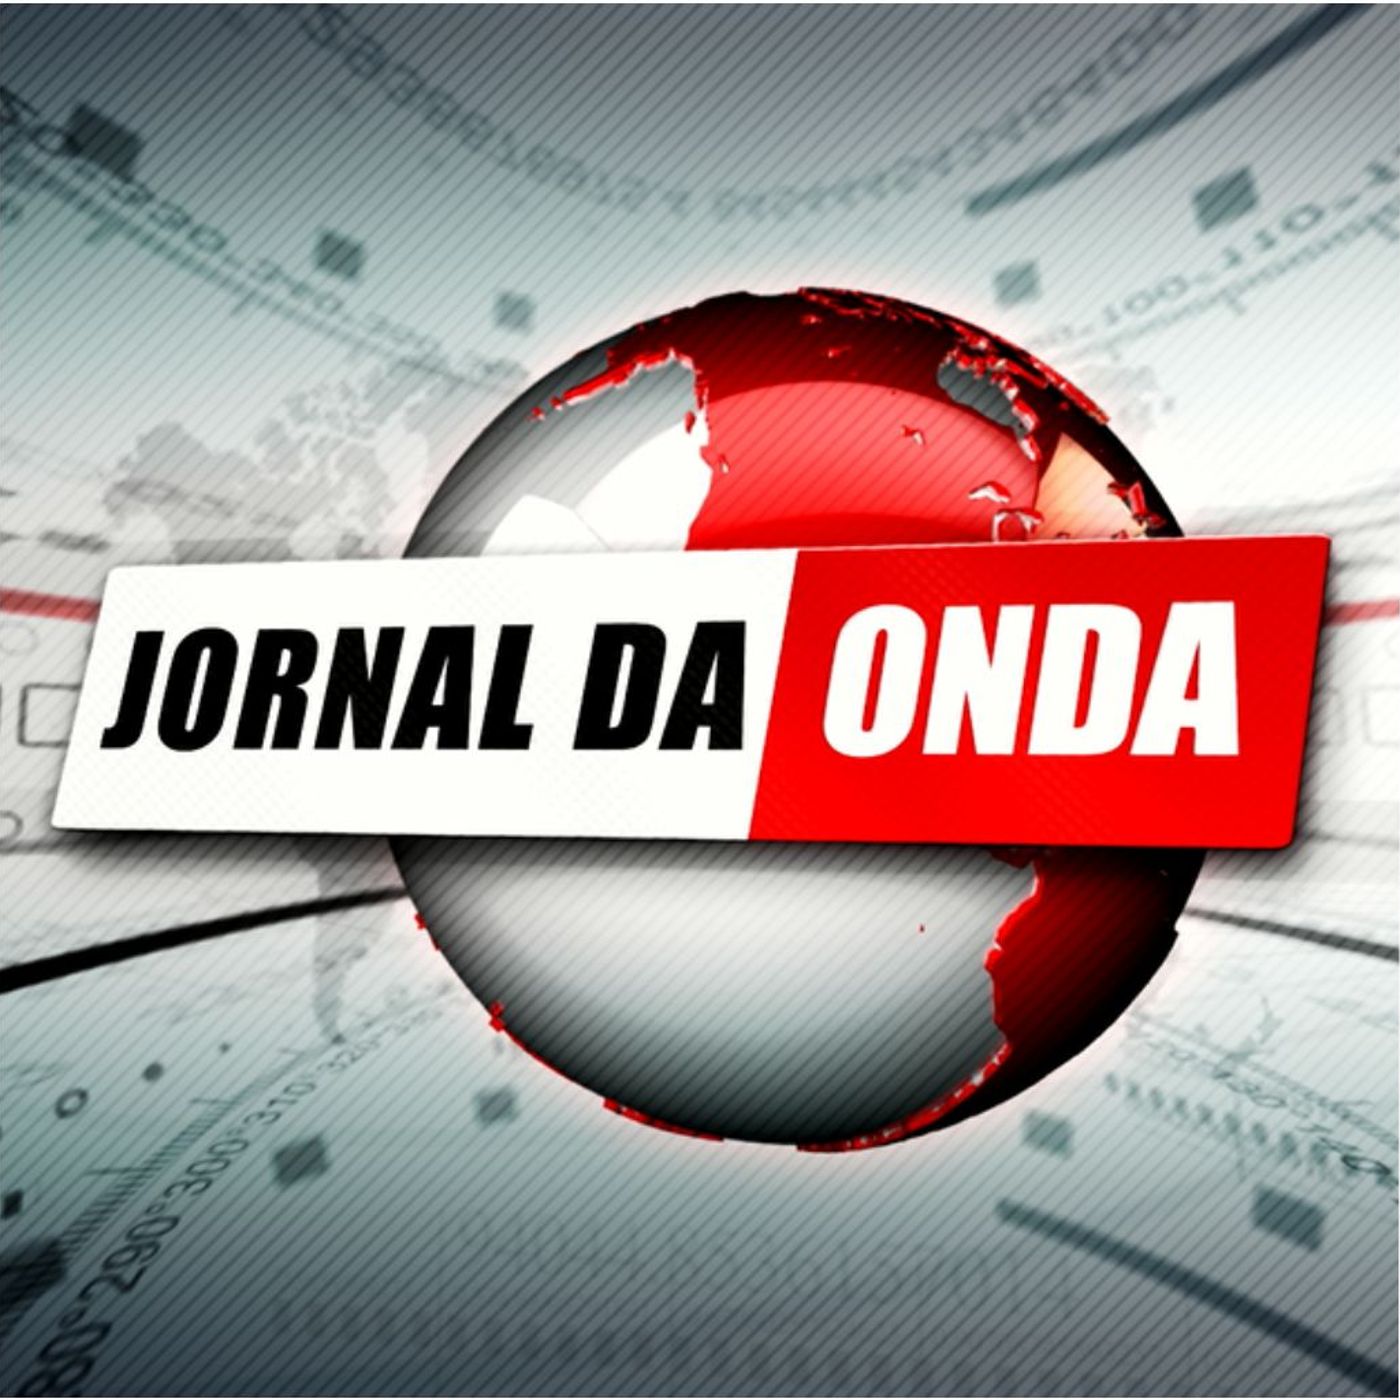 Jornal da Onda - Episódio 05